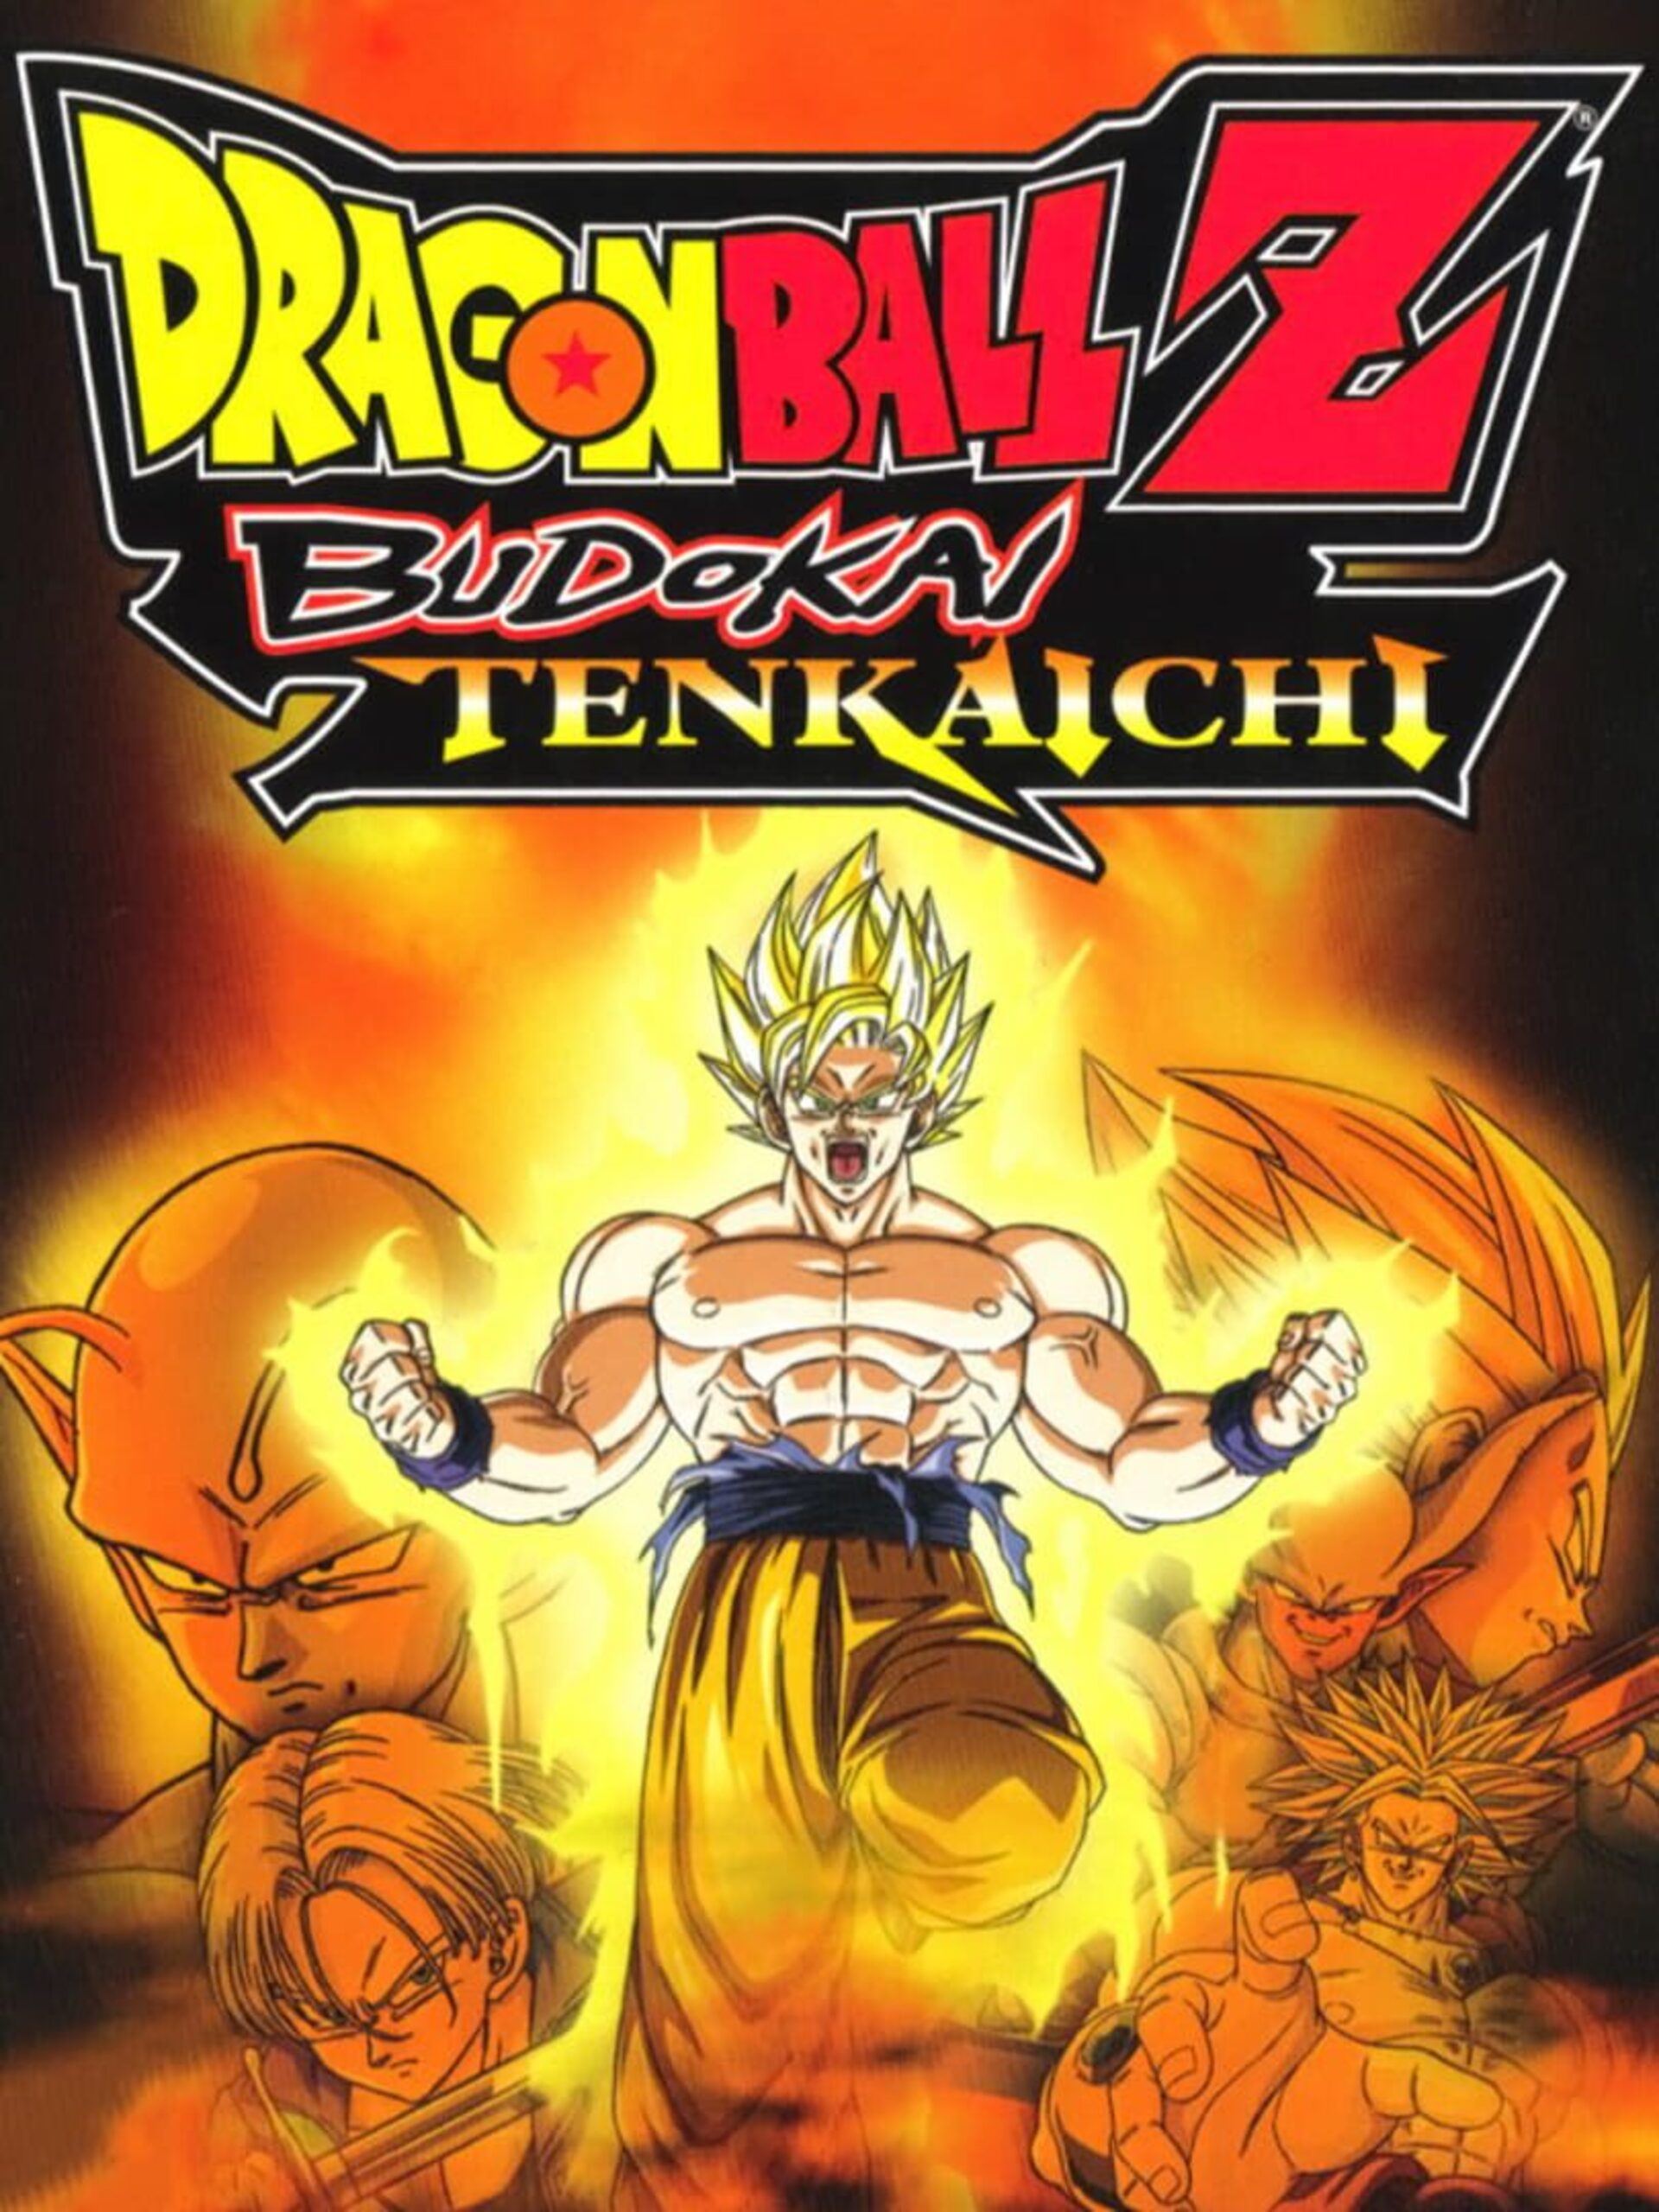 Dragonball Z Budokai Tenkaichi 3 - Roblox